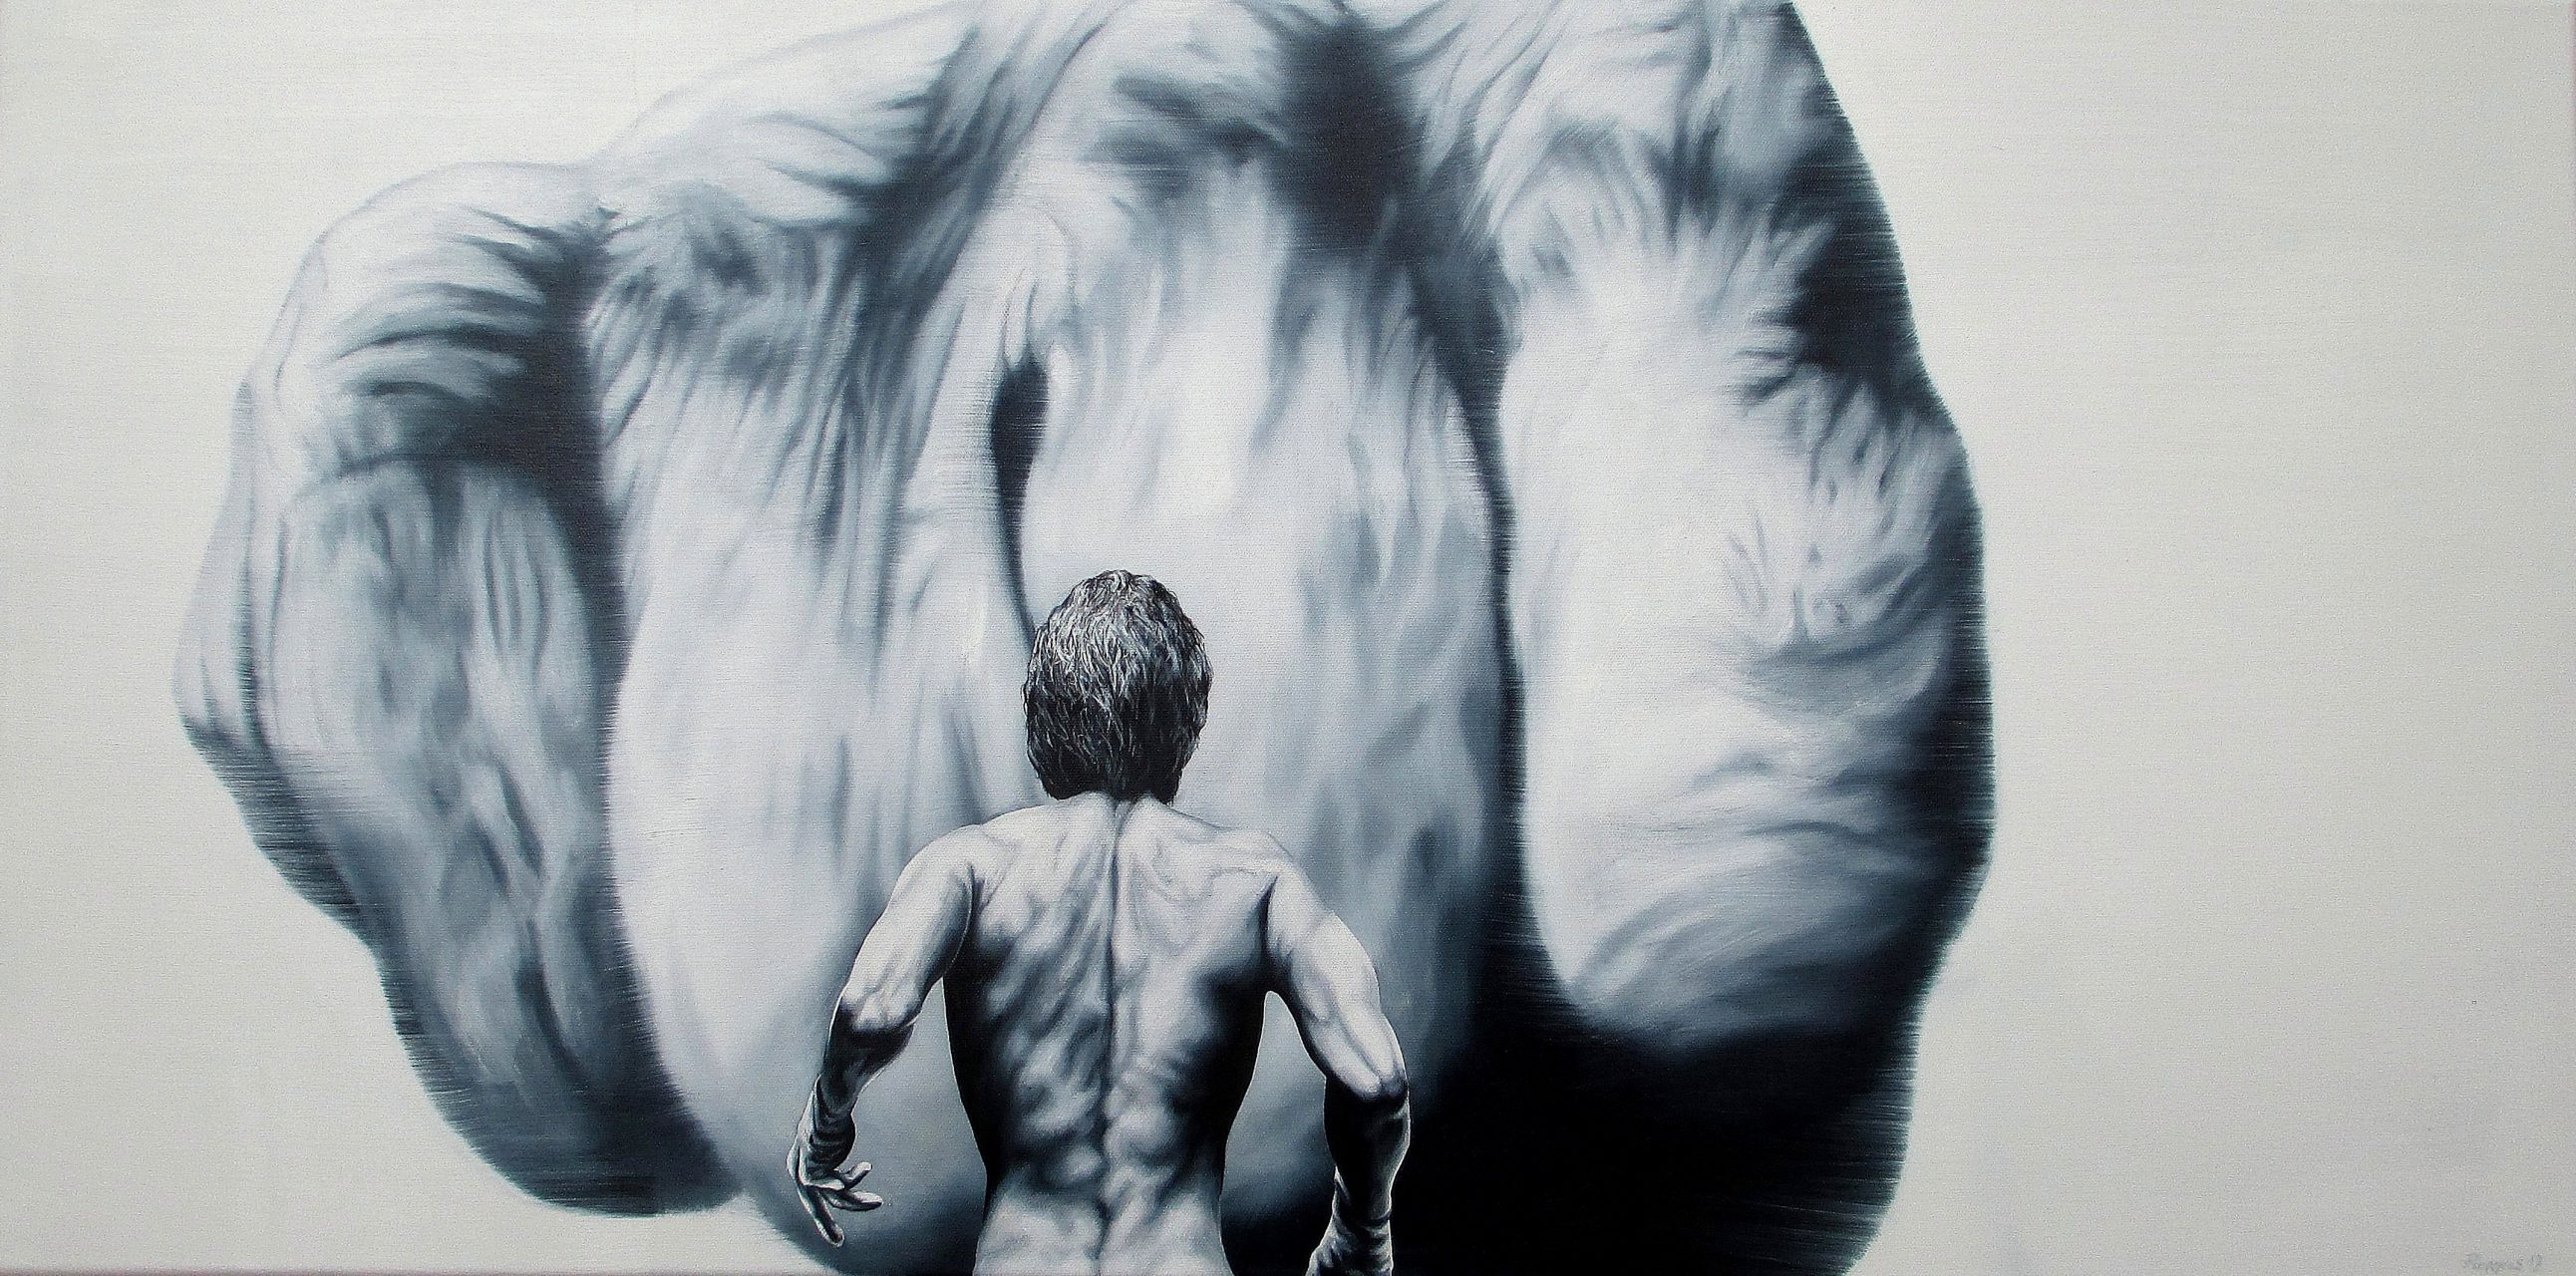 Kräftespiel 50 x 100 cm, Öl, Acryl auf Leinwand, Künstler Kai Piepgras